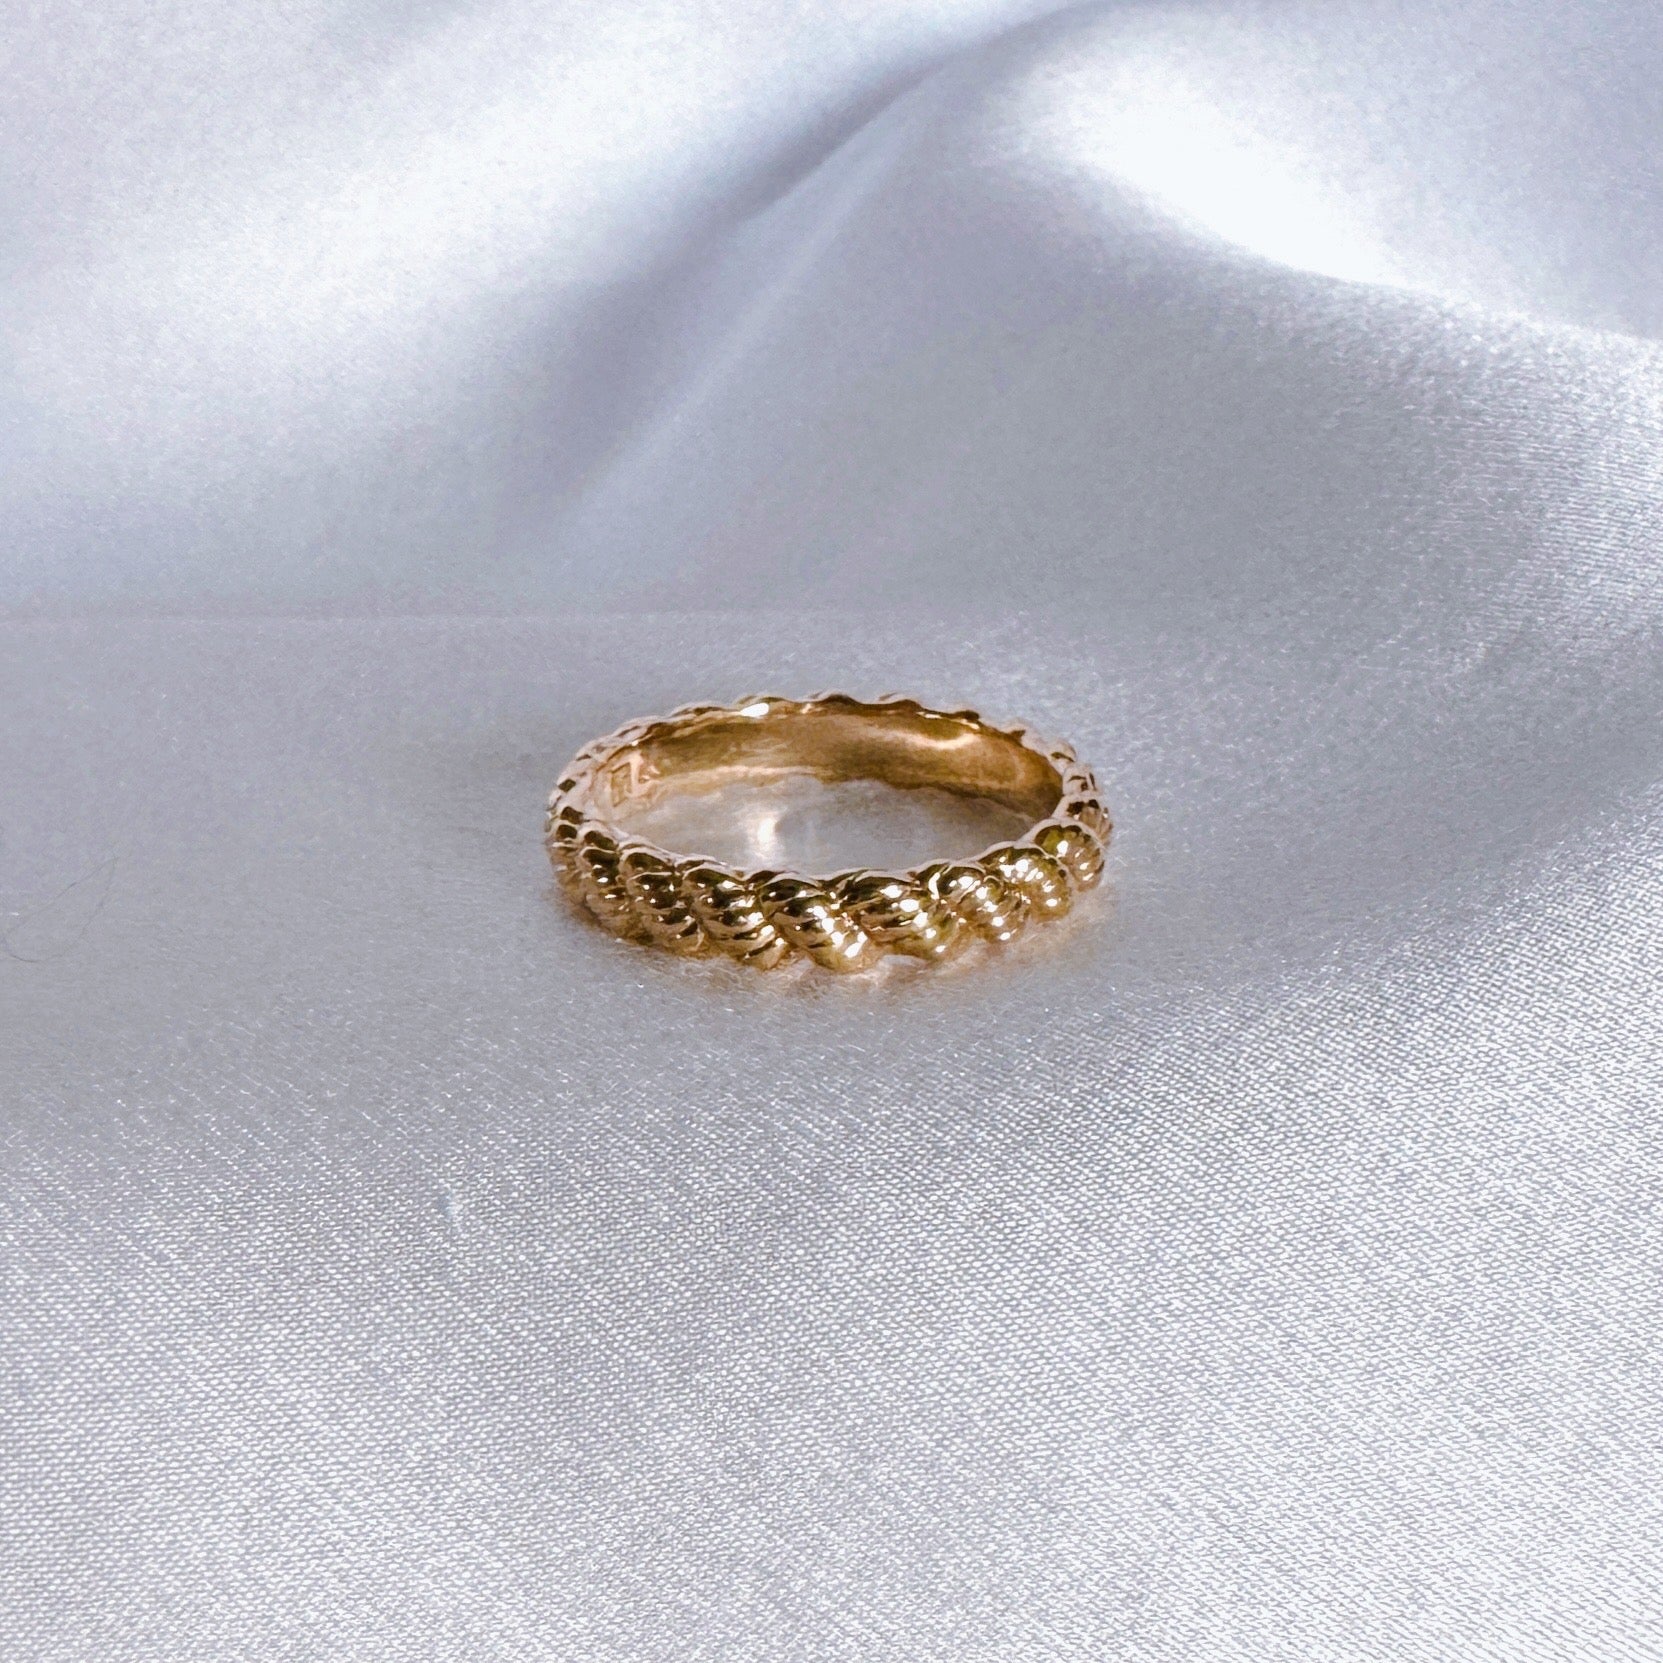 Gold-plated “Torsade” ring